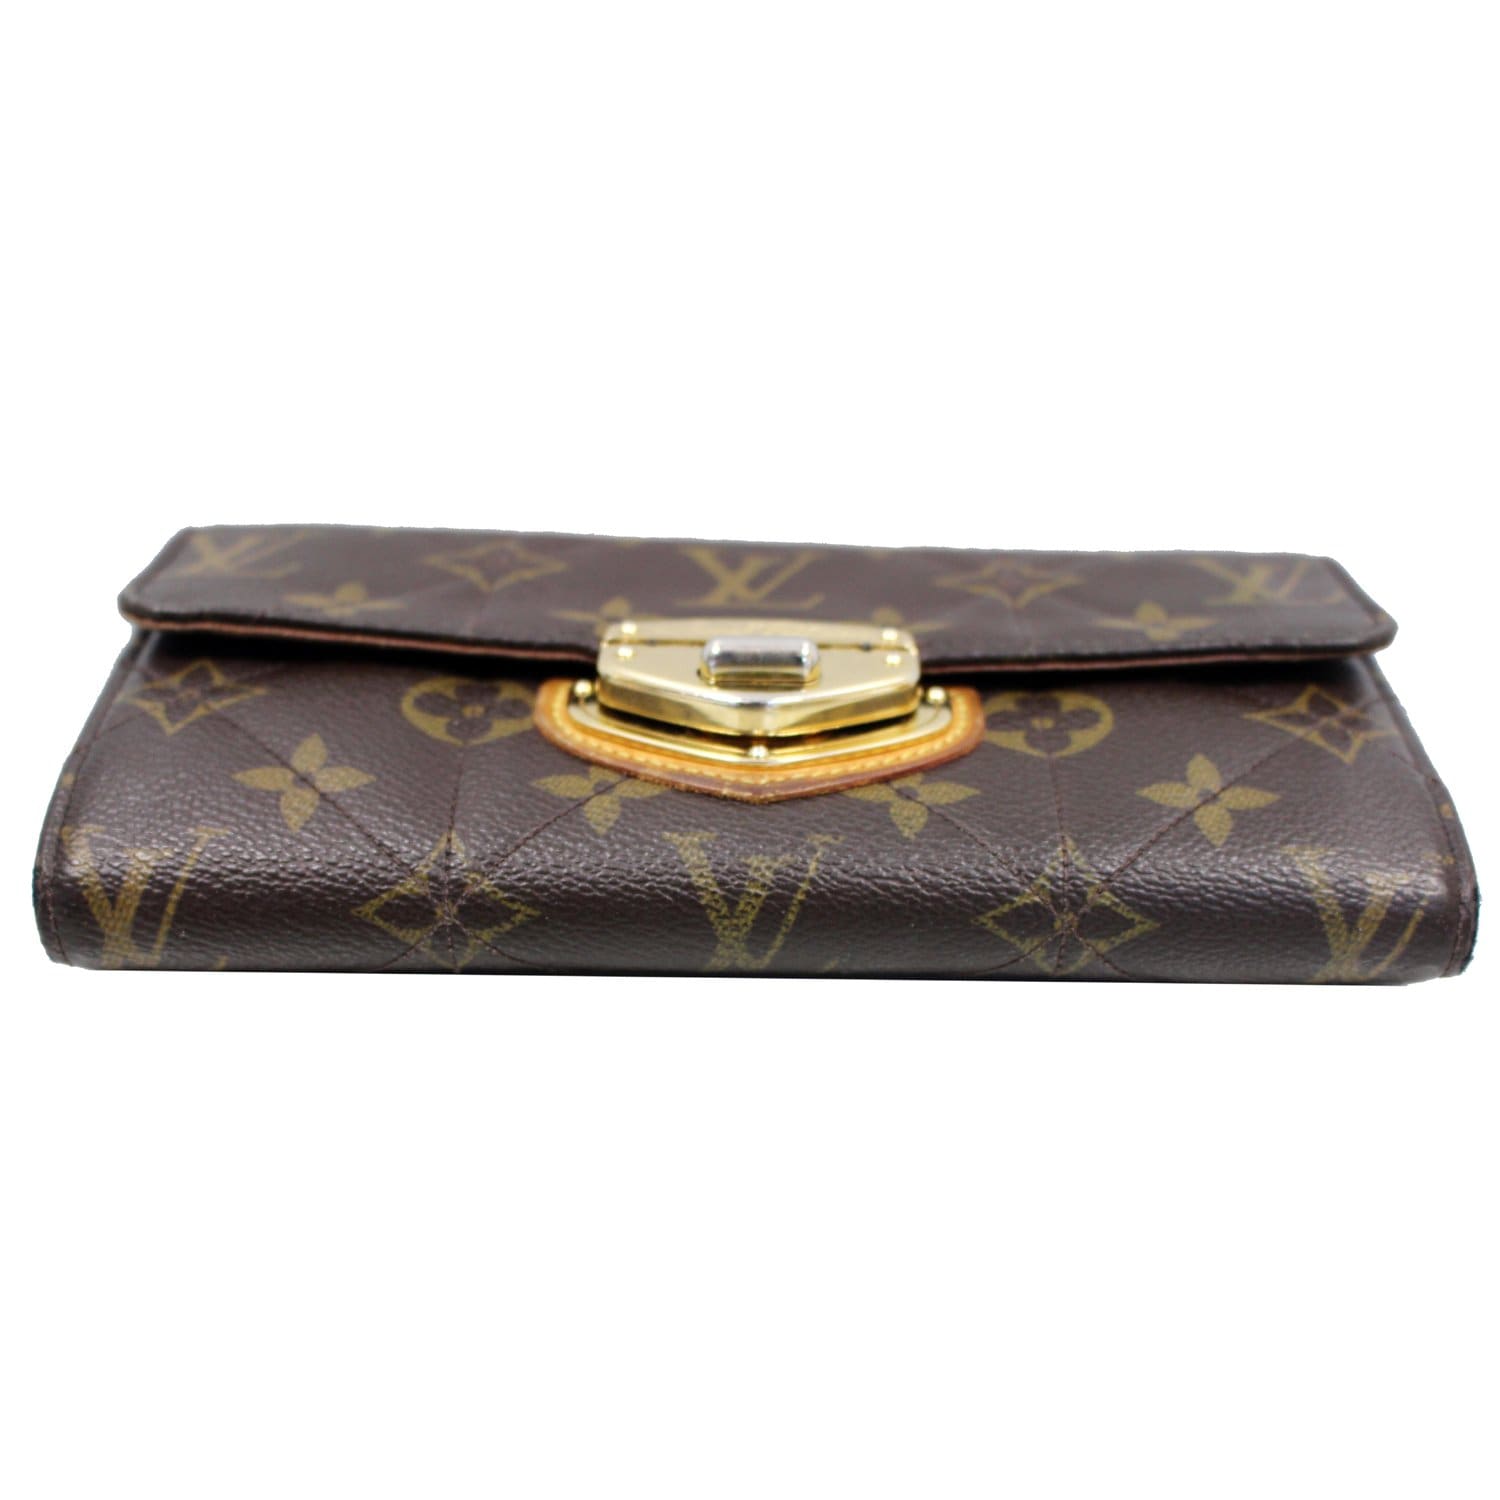 Etoile shopper leather handbag Louis Vuitton Brown in Leather - 24040940